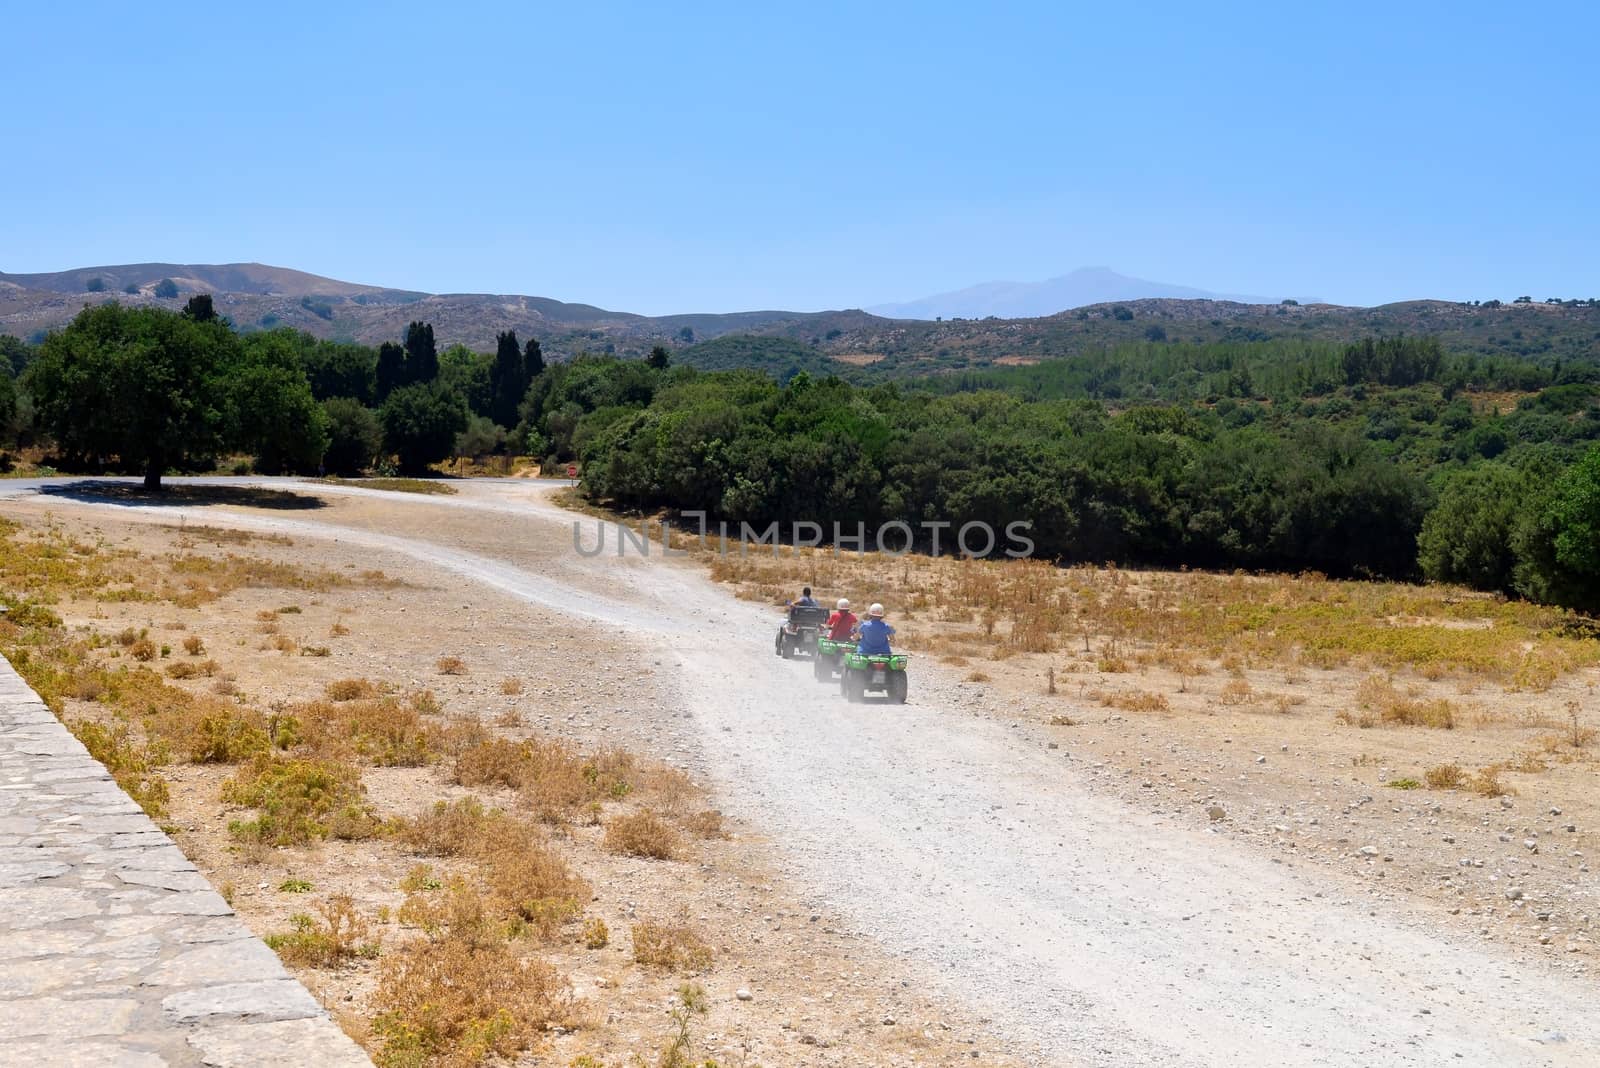 arkadi crete greece outdoors ATV offroad trip